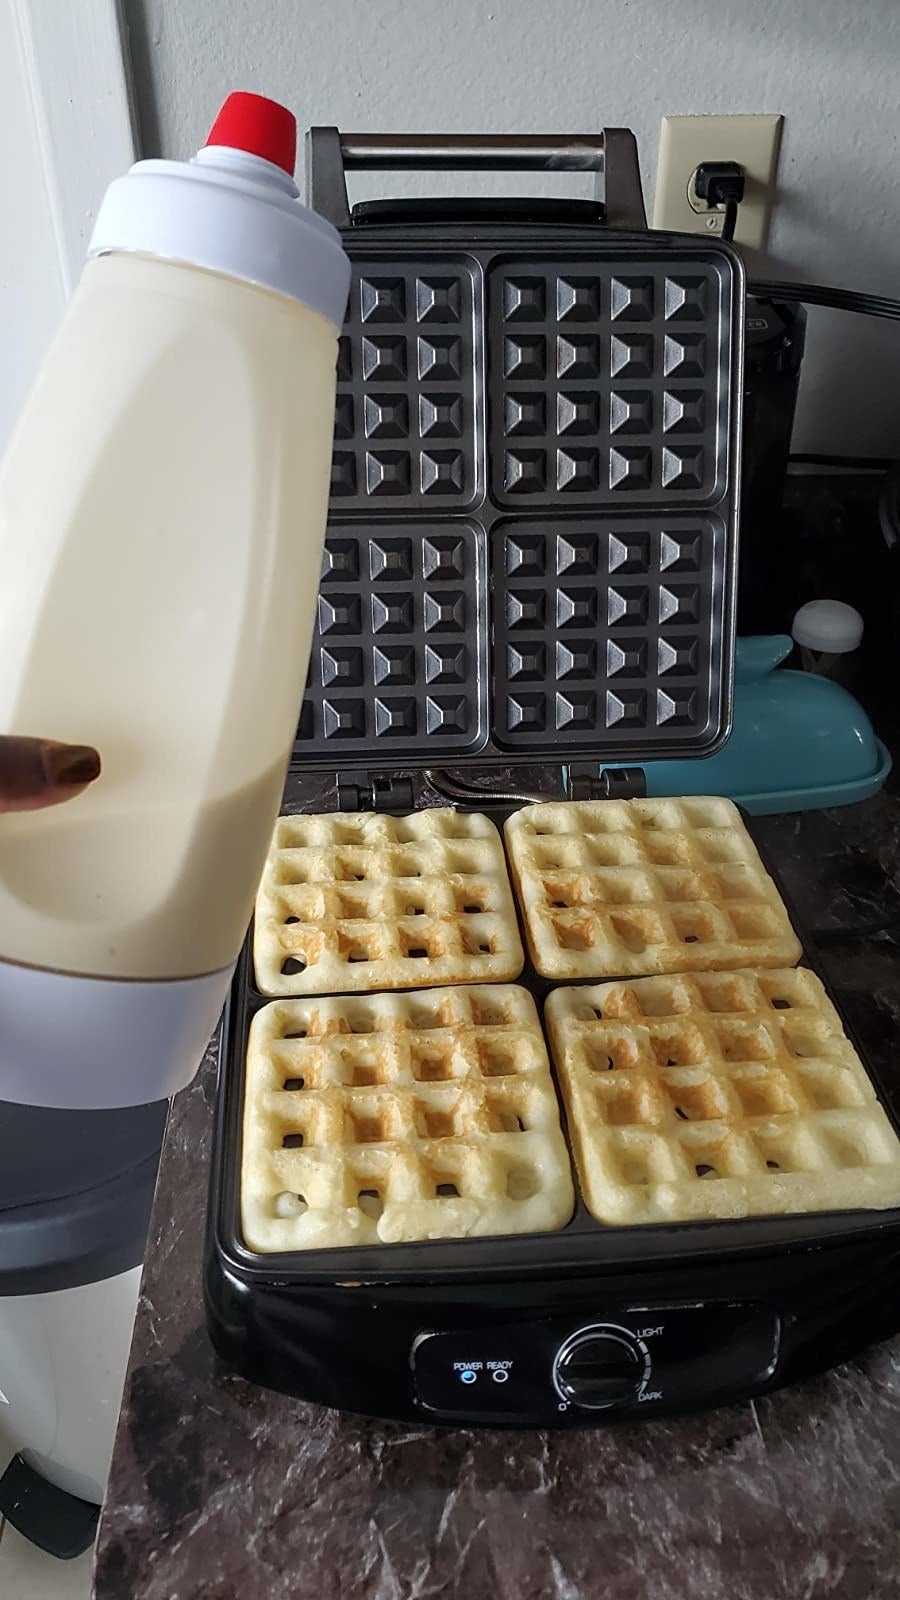 Home Mini Waffle Maker Plates Waffle Makers Waffle Cone Maker Fully  Automatic Roaster - AliExpress